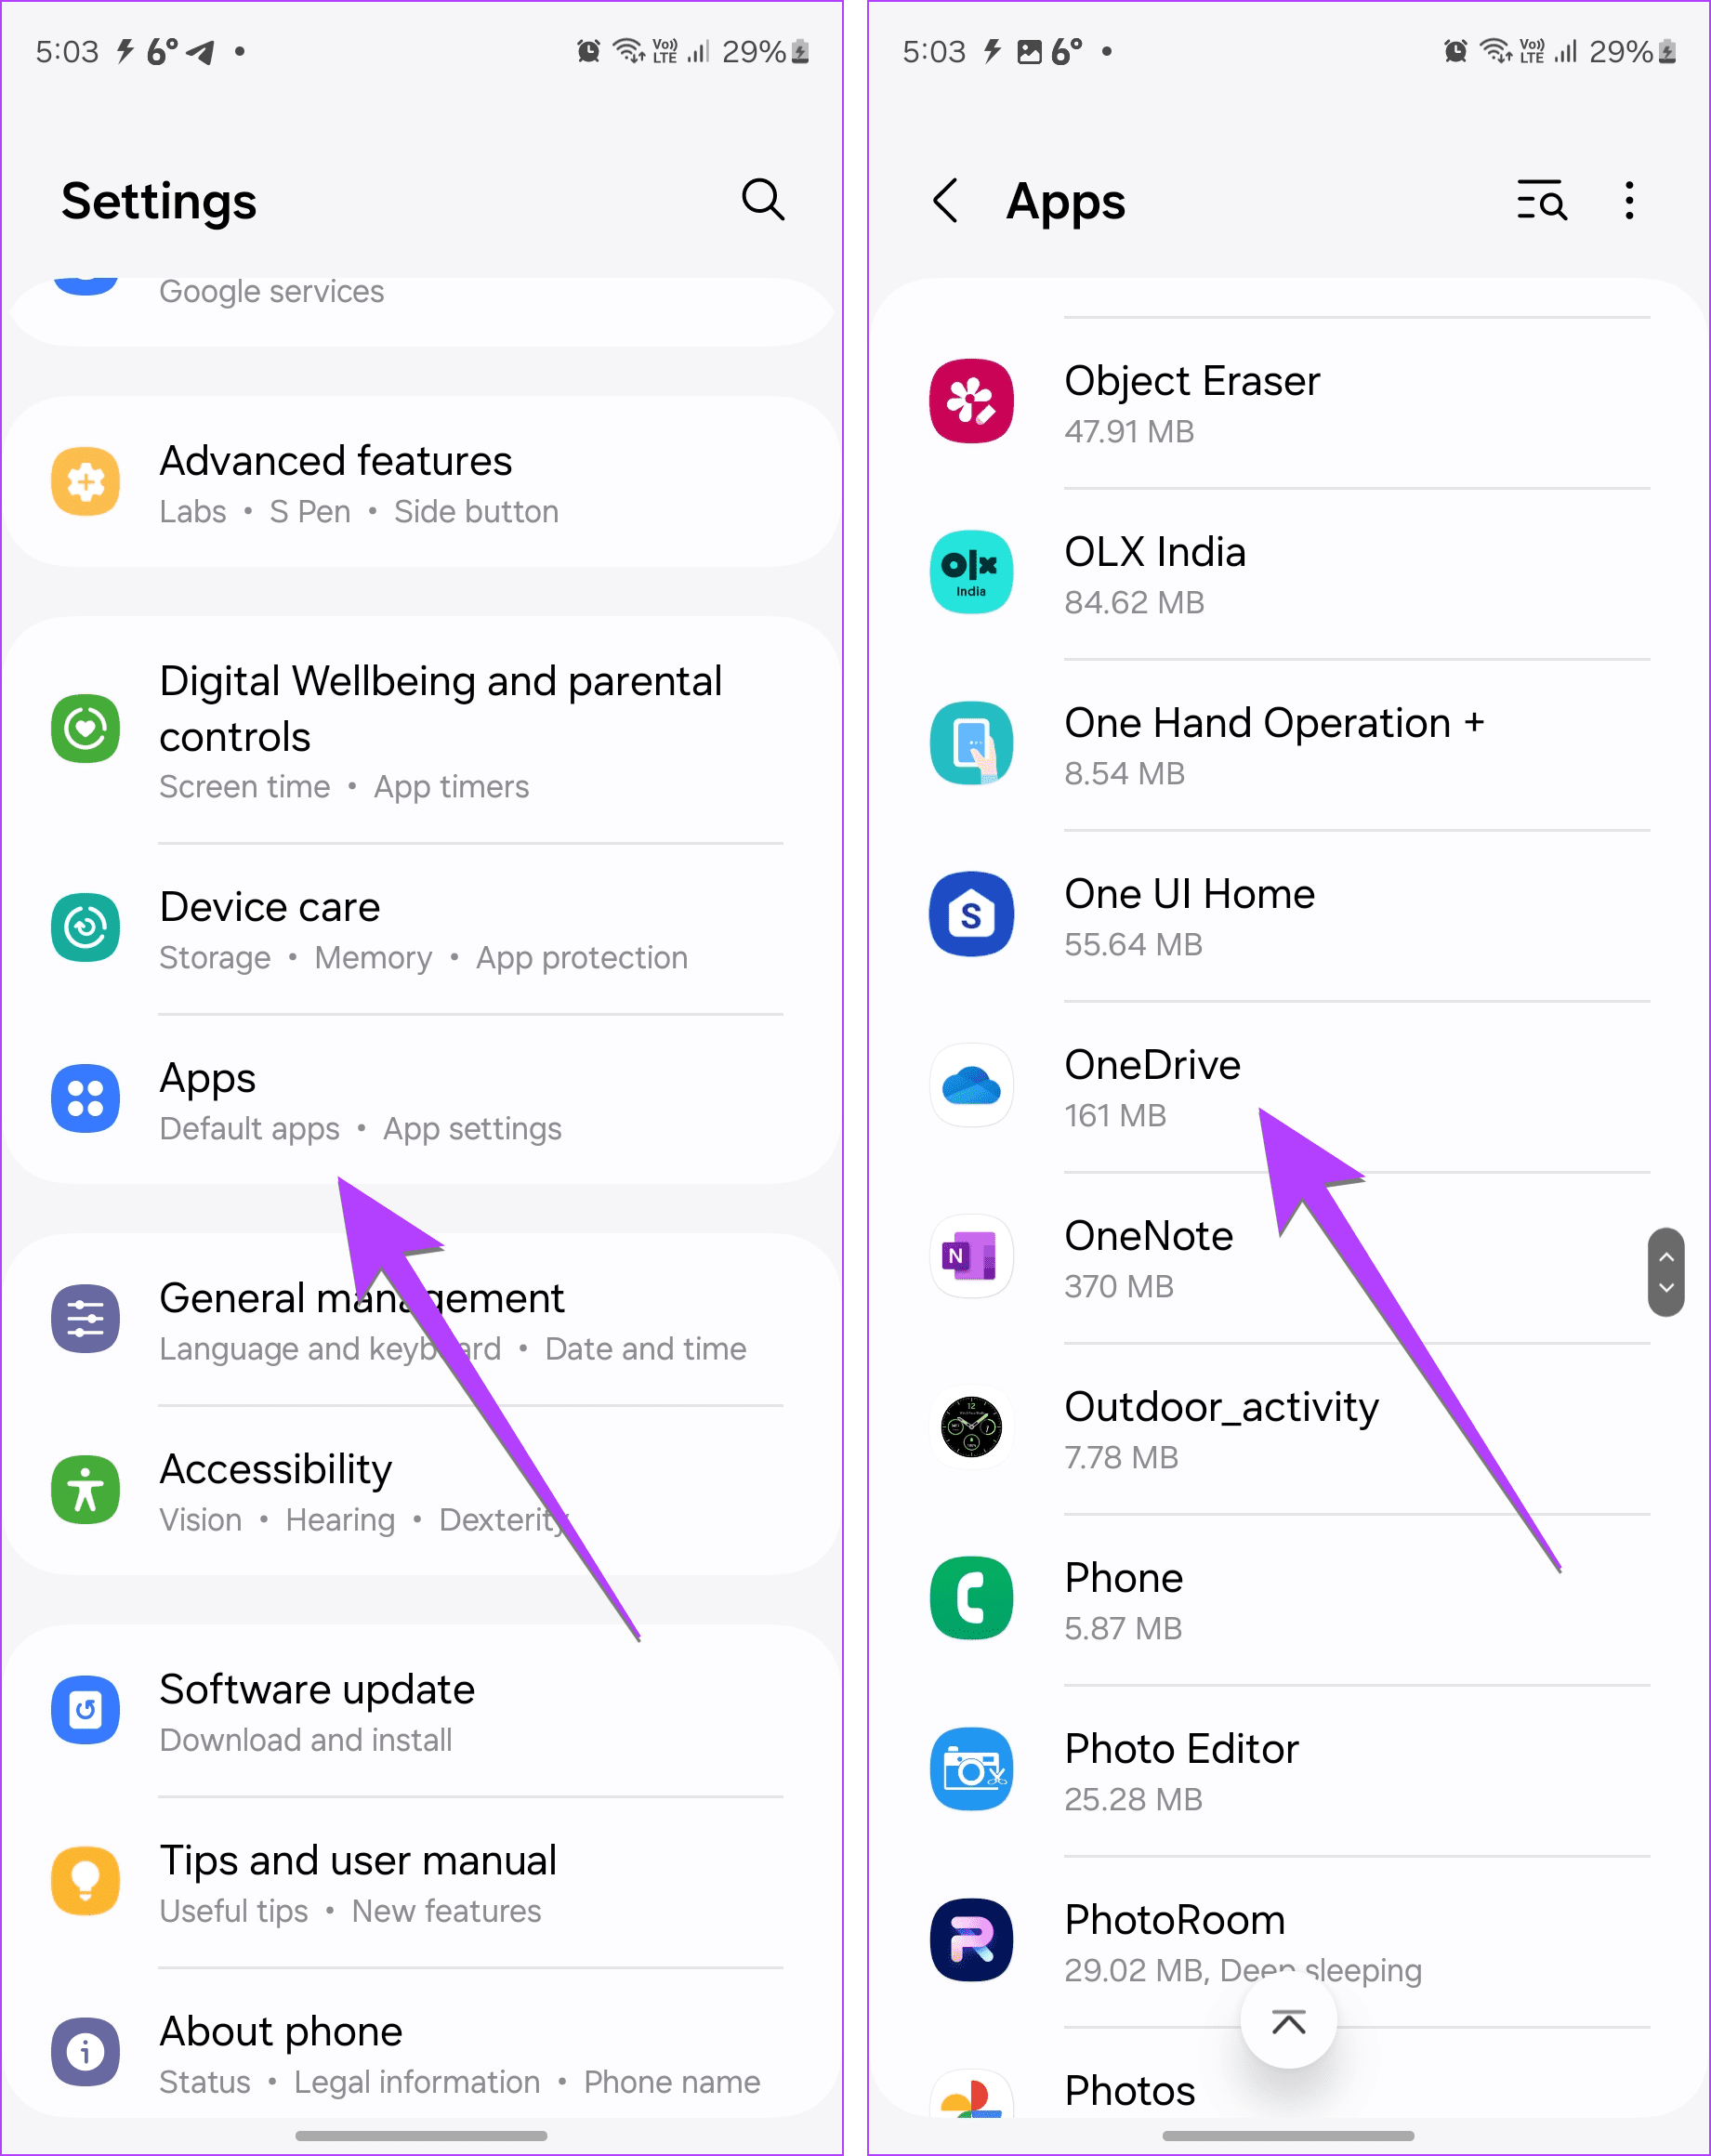 Find App in settings